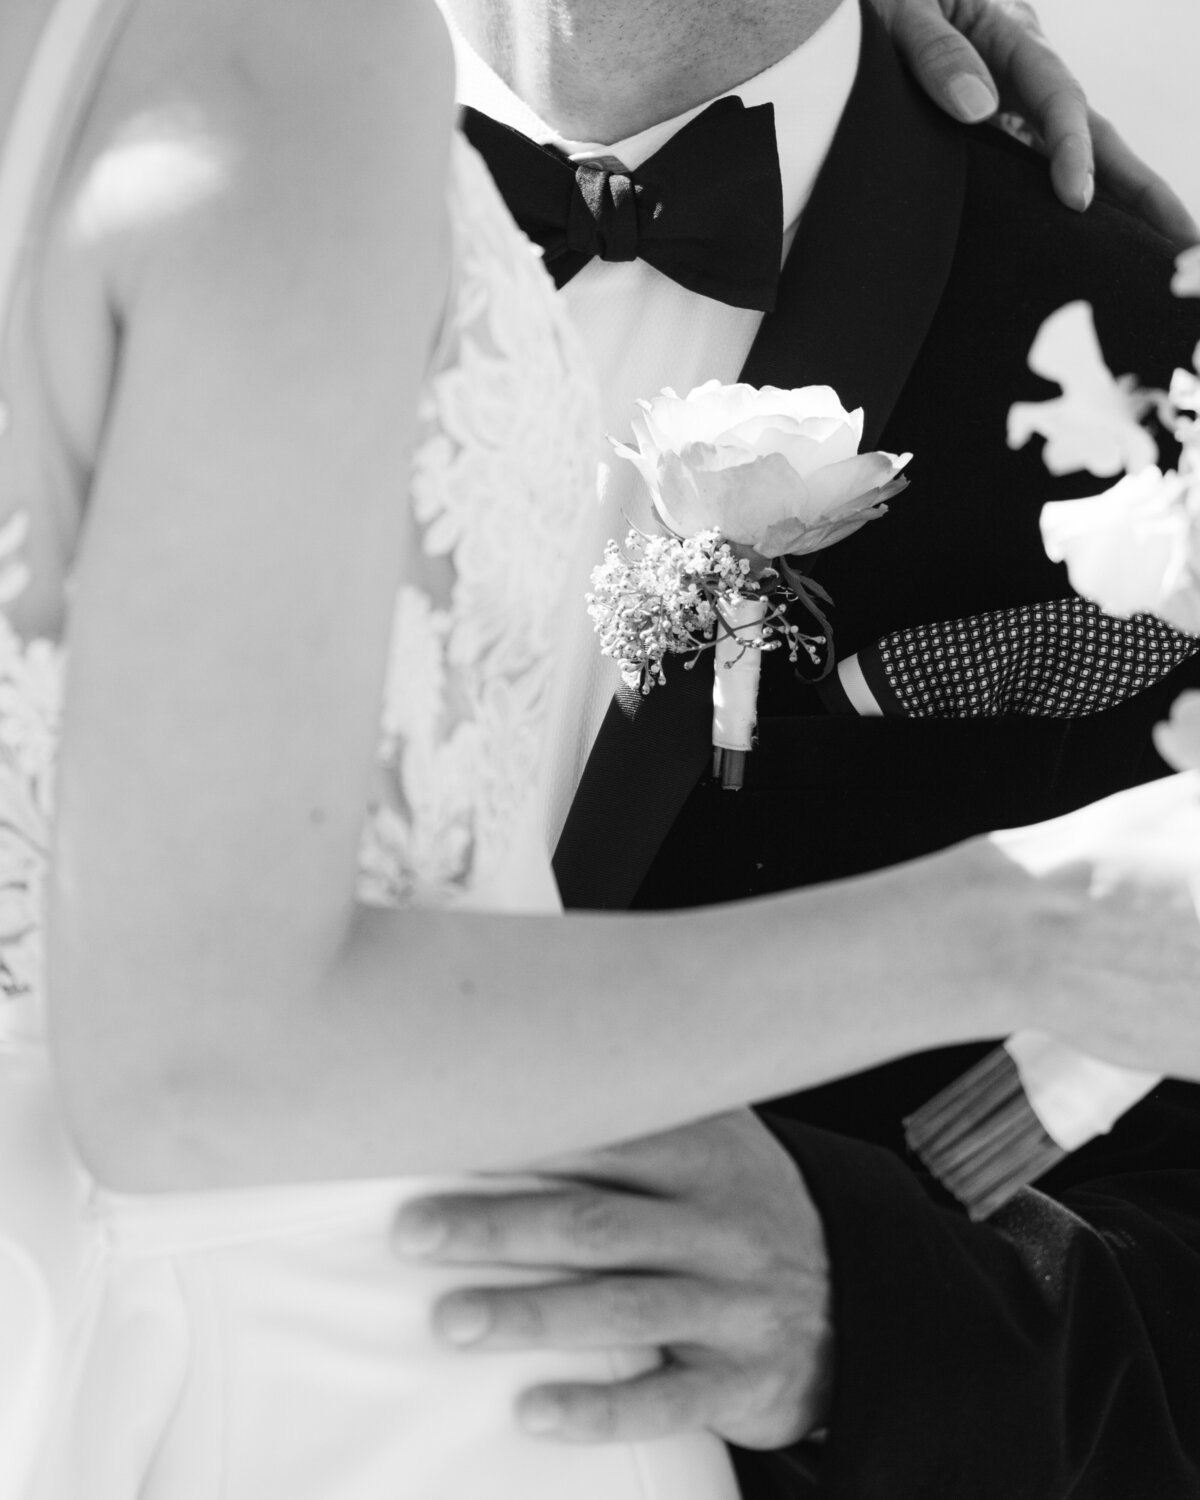 Editorial portrait of bride and groom at black tie wedding